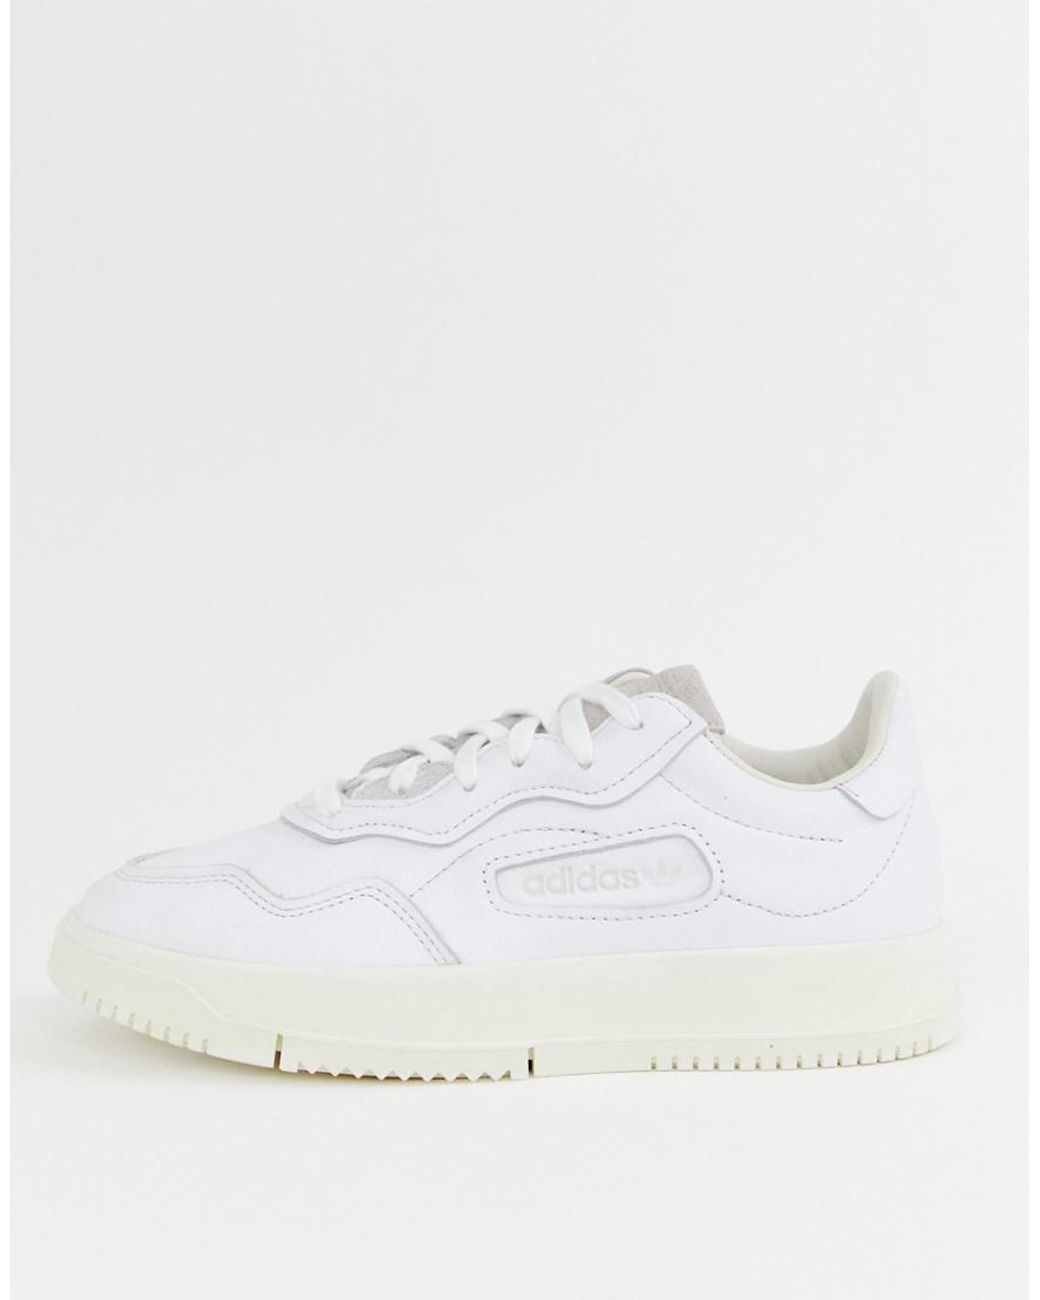 adidas Originals Sc Premiere Sneakers In White | Lyst